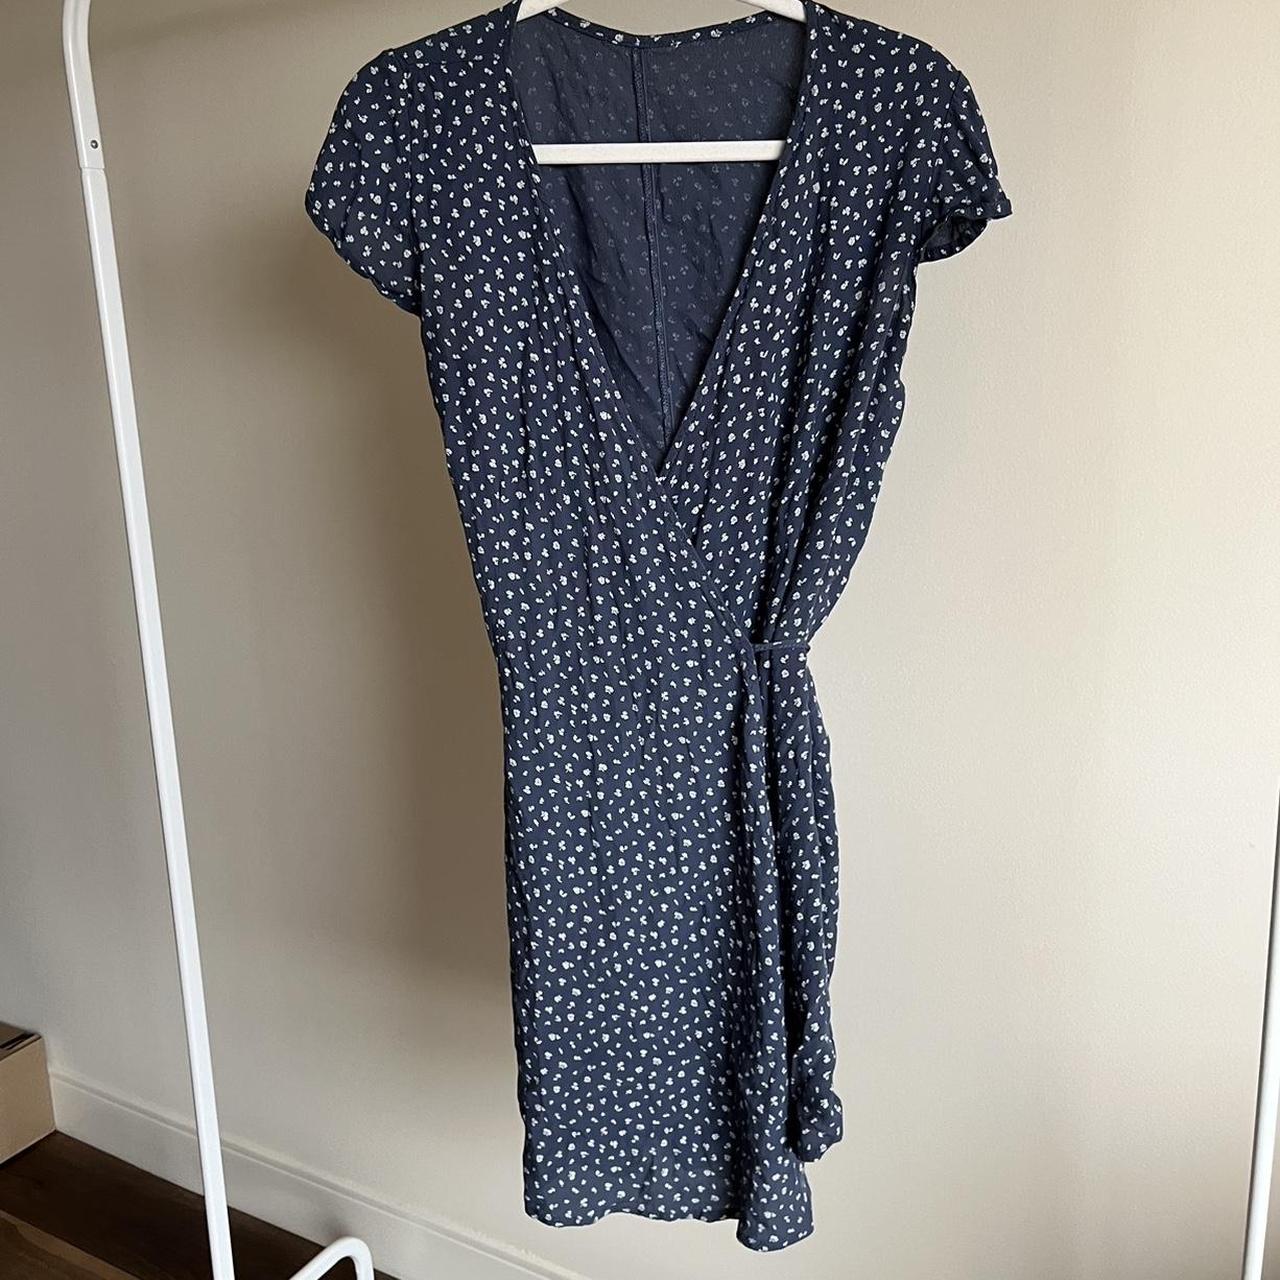 Brandy Melville Robbie Dress Blue - $13 (62% Off Retail) - From Chloe